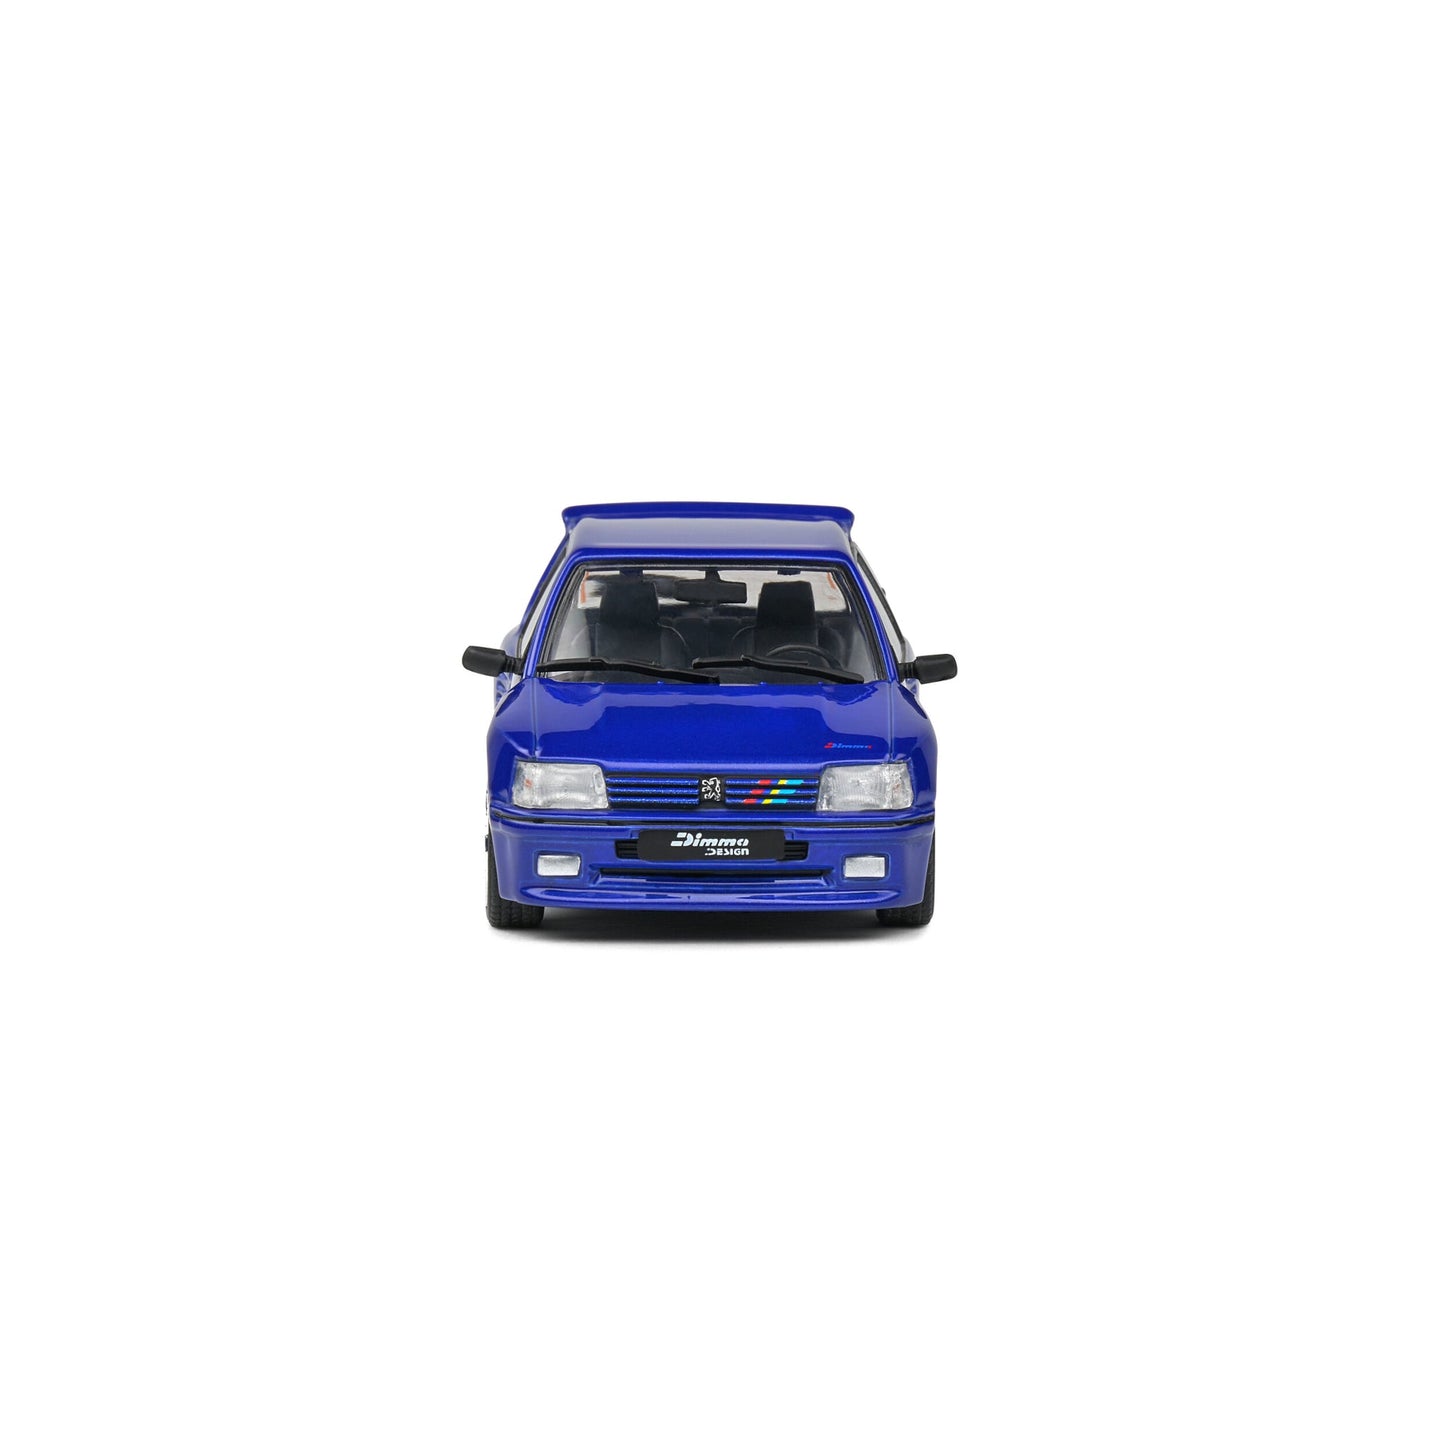 Peugeot 205 GTI Dimma Bodykit 1989 Bleue Solido 1/43 - S4310803